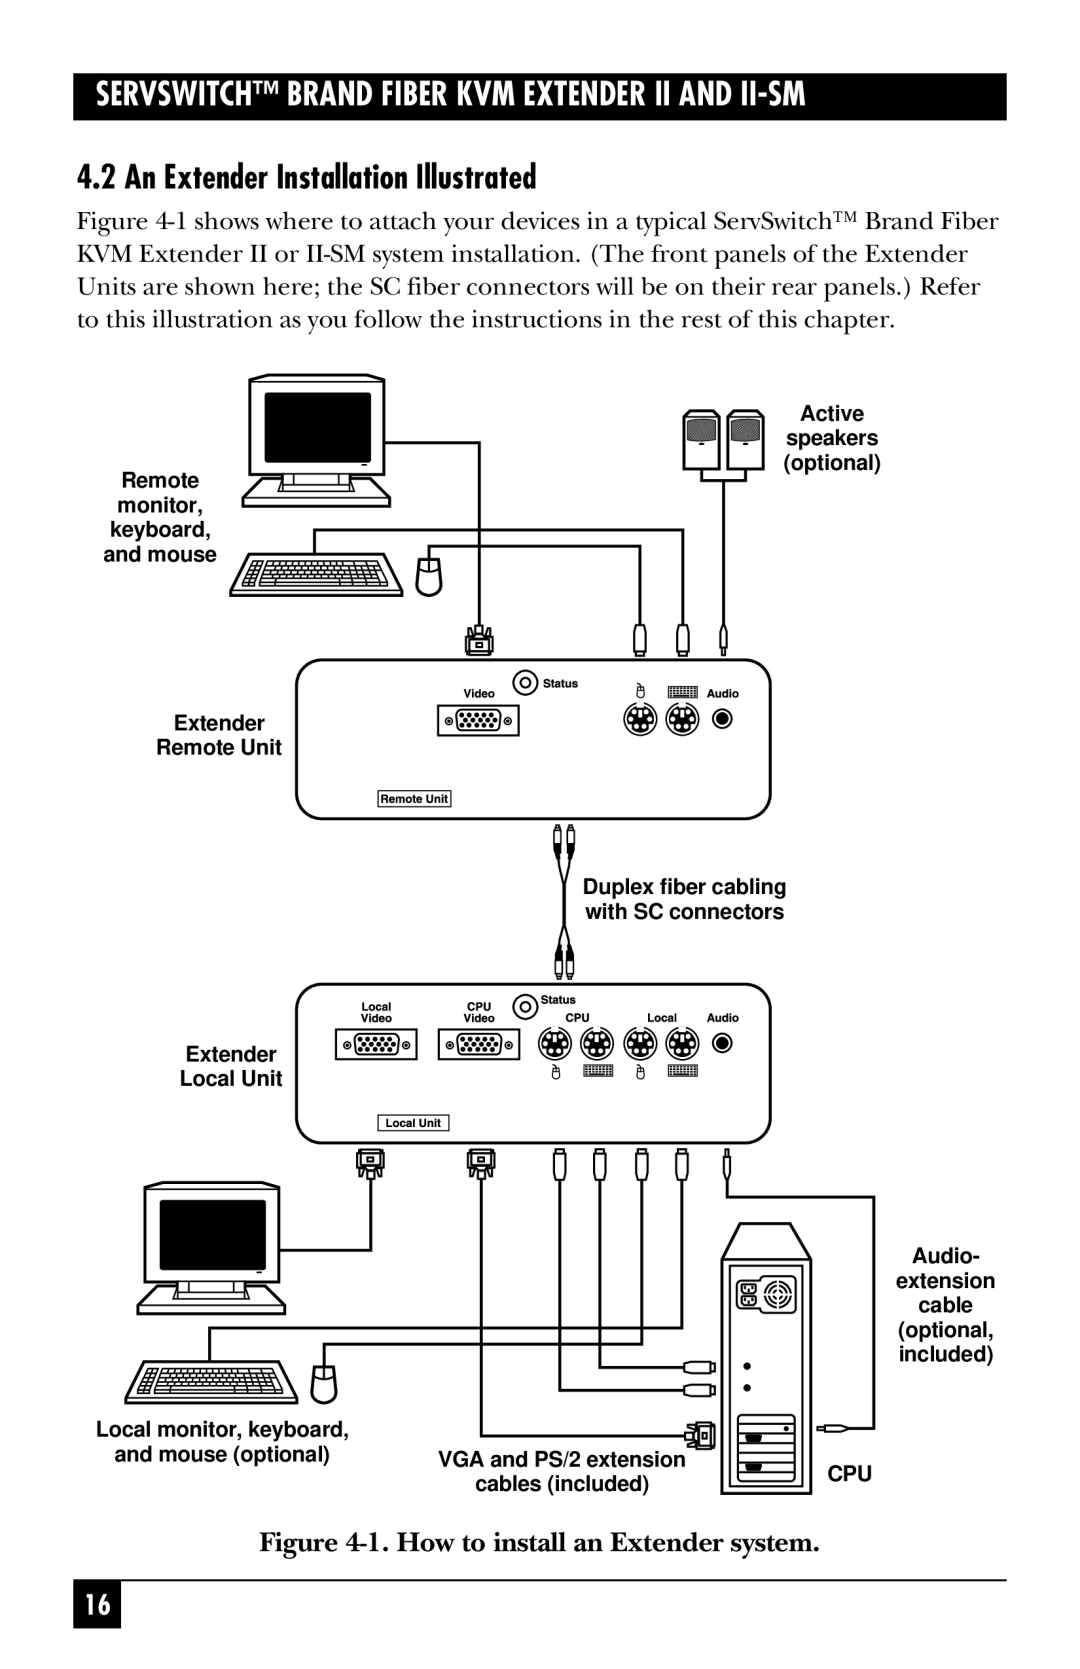 Black Box ACS251A, ACS250A manual An Extender Installation Illustrated, Servswitch Brand Fiber Kvm Extender Ii And Ii-Sm 